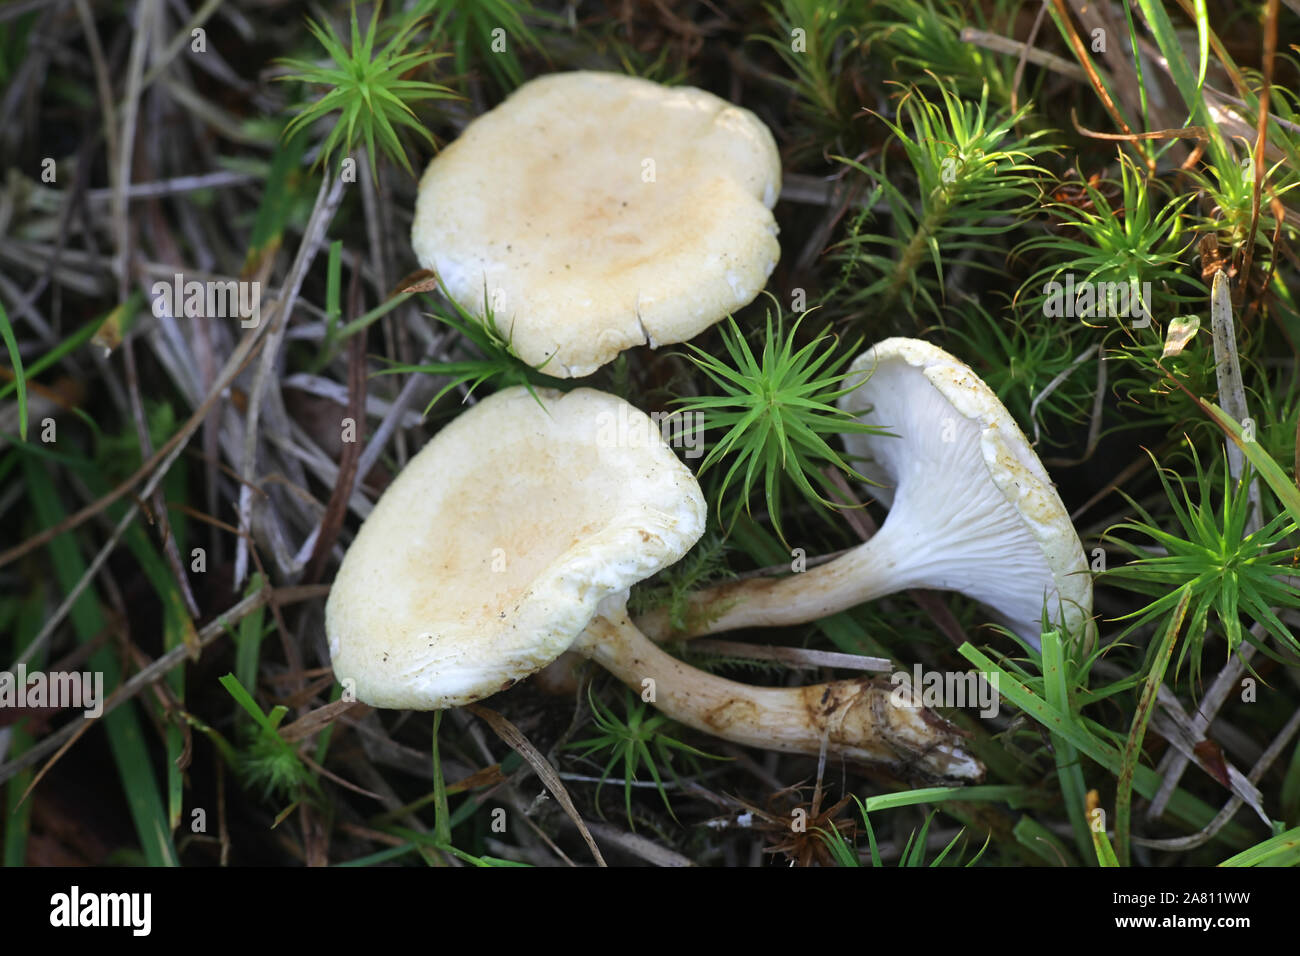 Hygrophoropsis pallida (H. aurantiaca var. pallida), known as False Chanterelle, wild mushroom from Finland Stock Photo